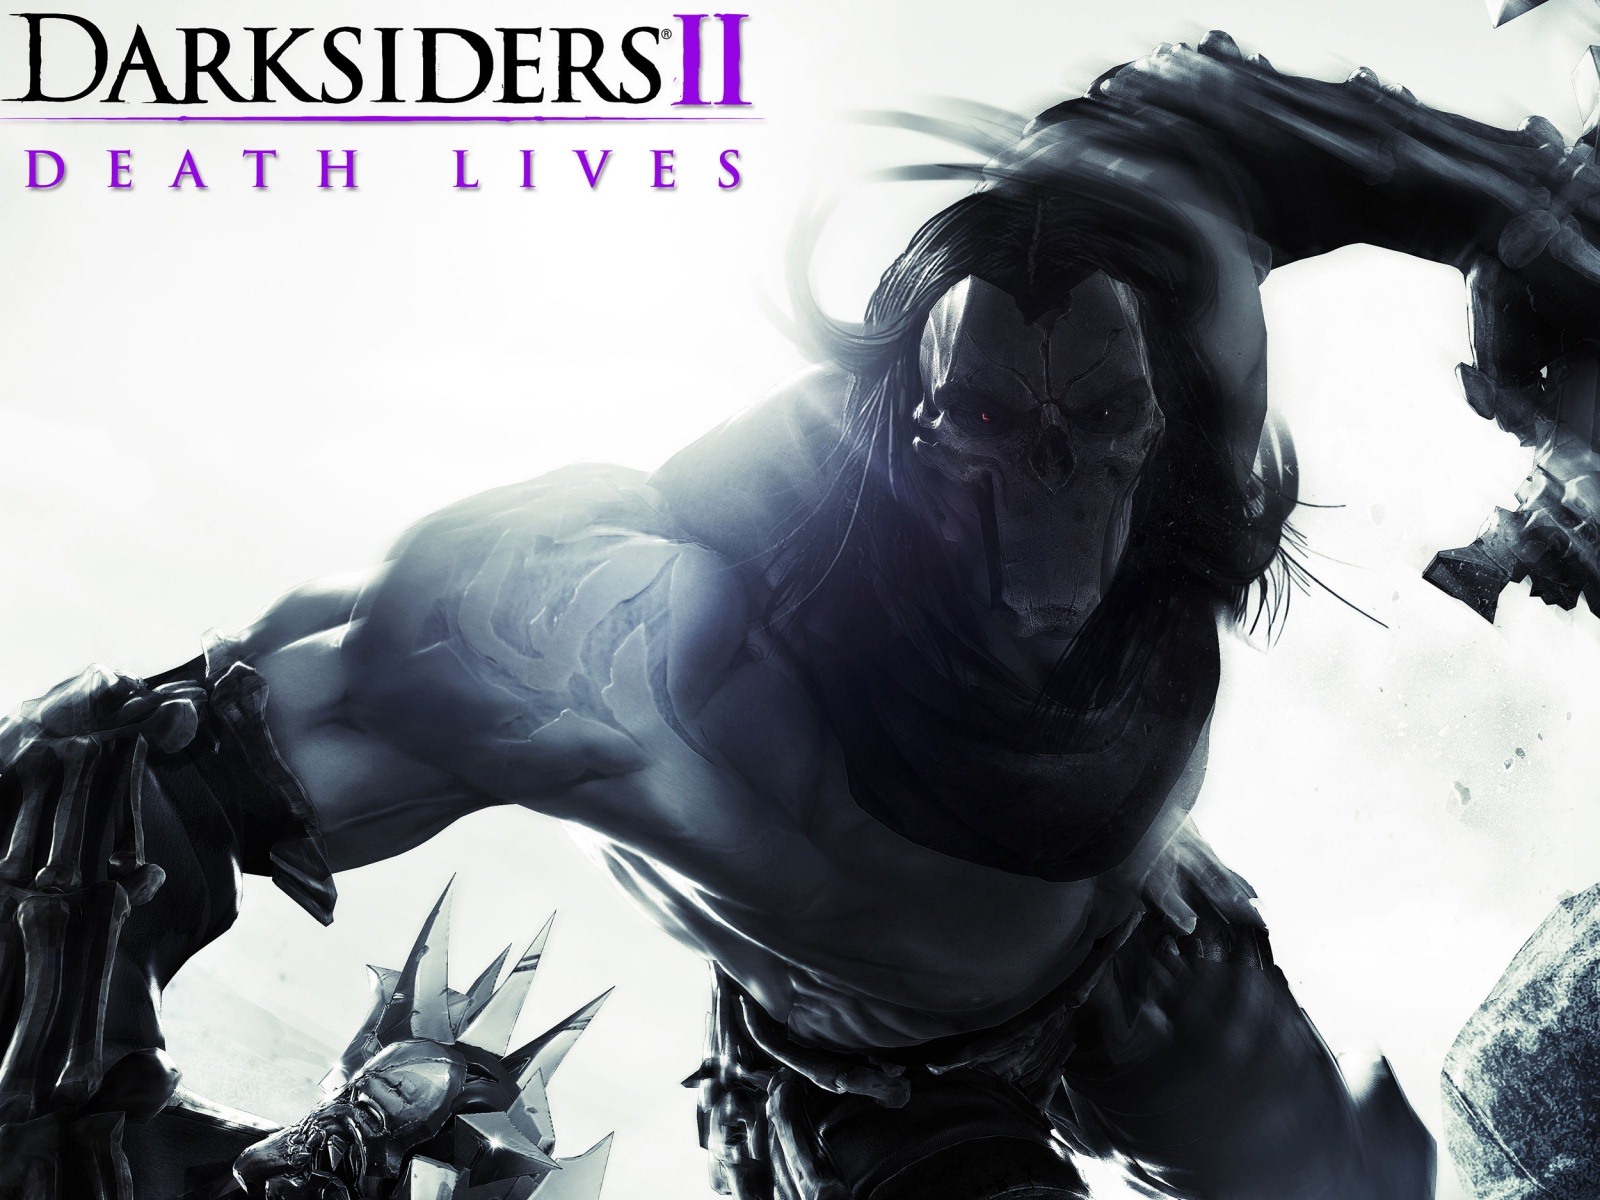 Darksiders II 暗黑血统 2 游戏高清壁纸6 - 1600x1200